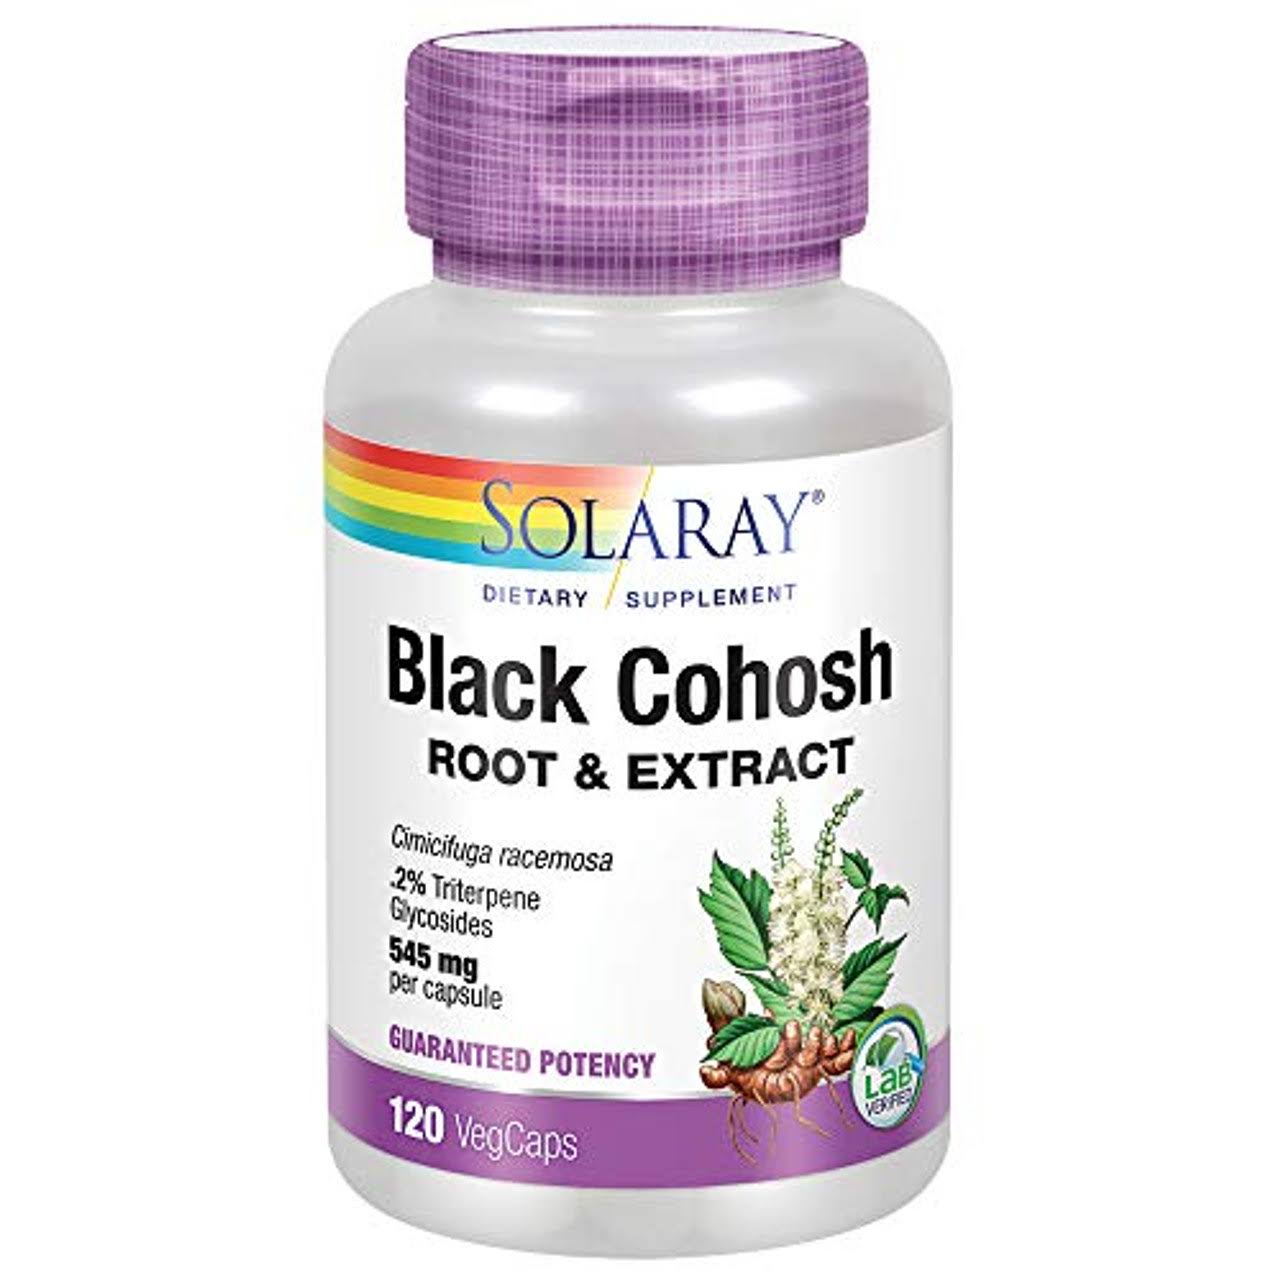 Solaray Black Cohosh Root Supplement - 545mg, 120ct